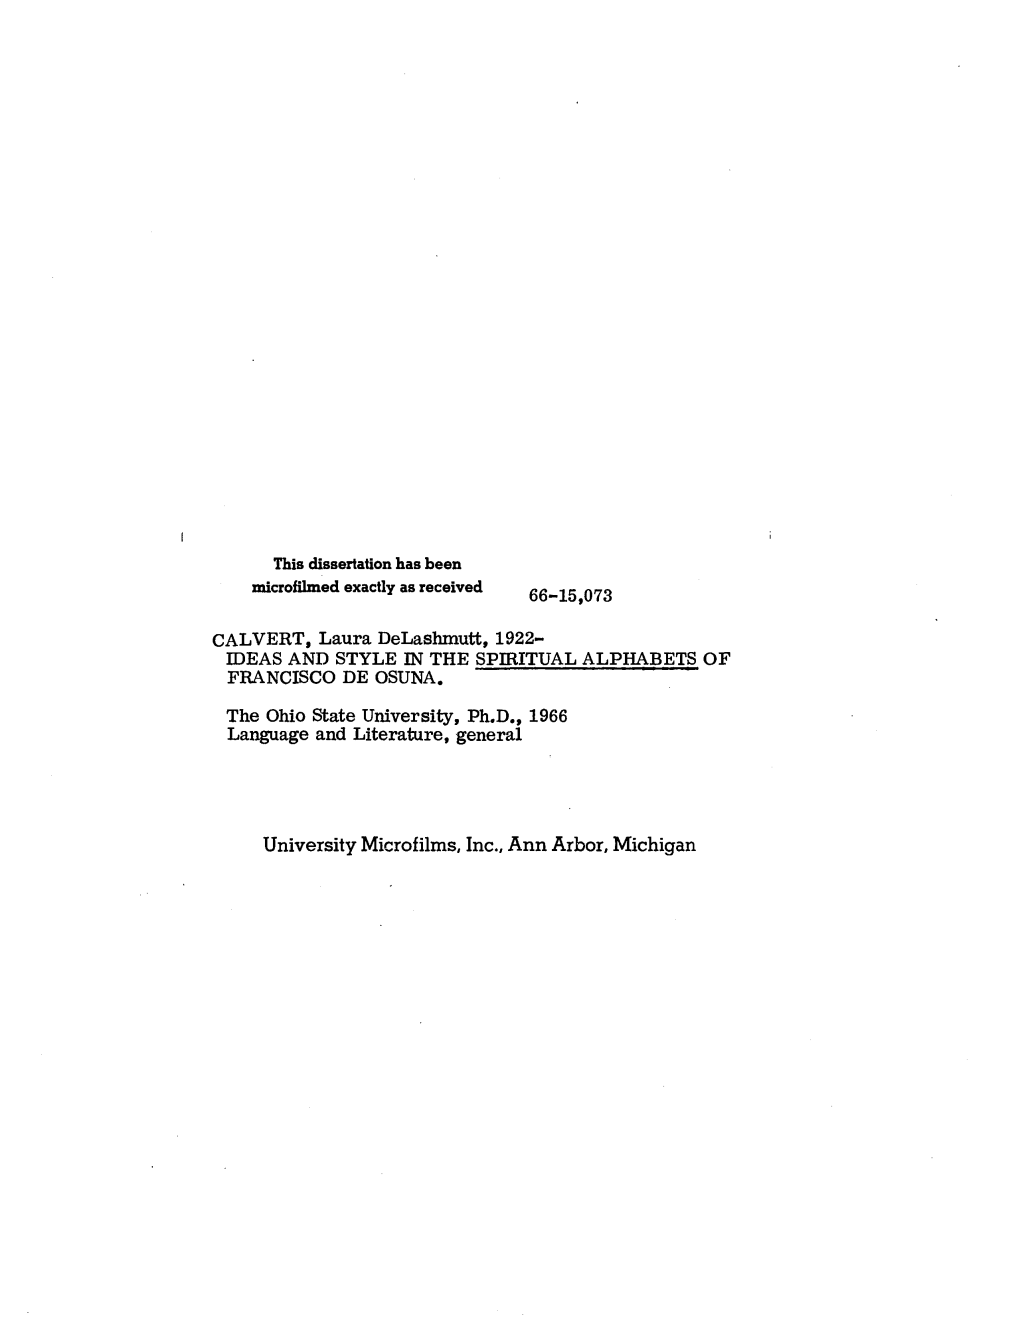 University Microfilms, Inc., Ann Arbor, Michigan Laura Delashmutt Calvert 1967